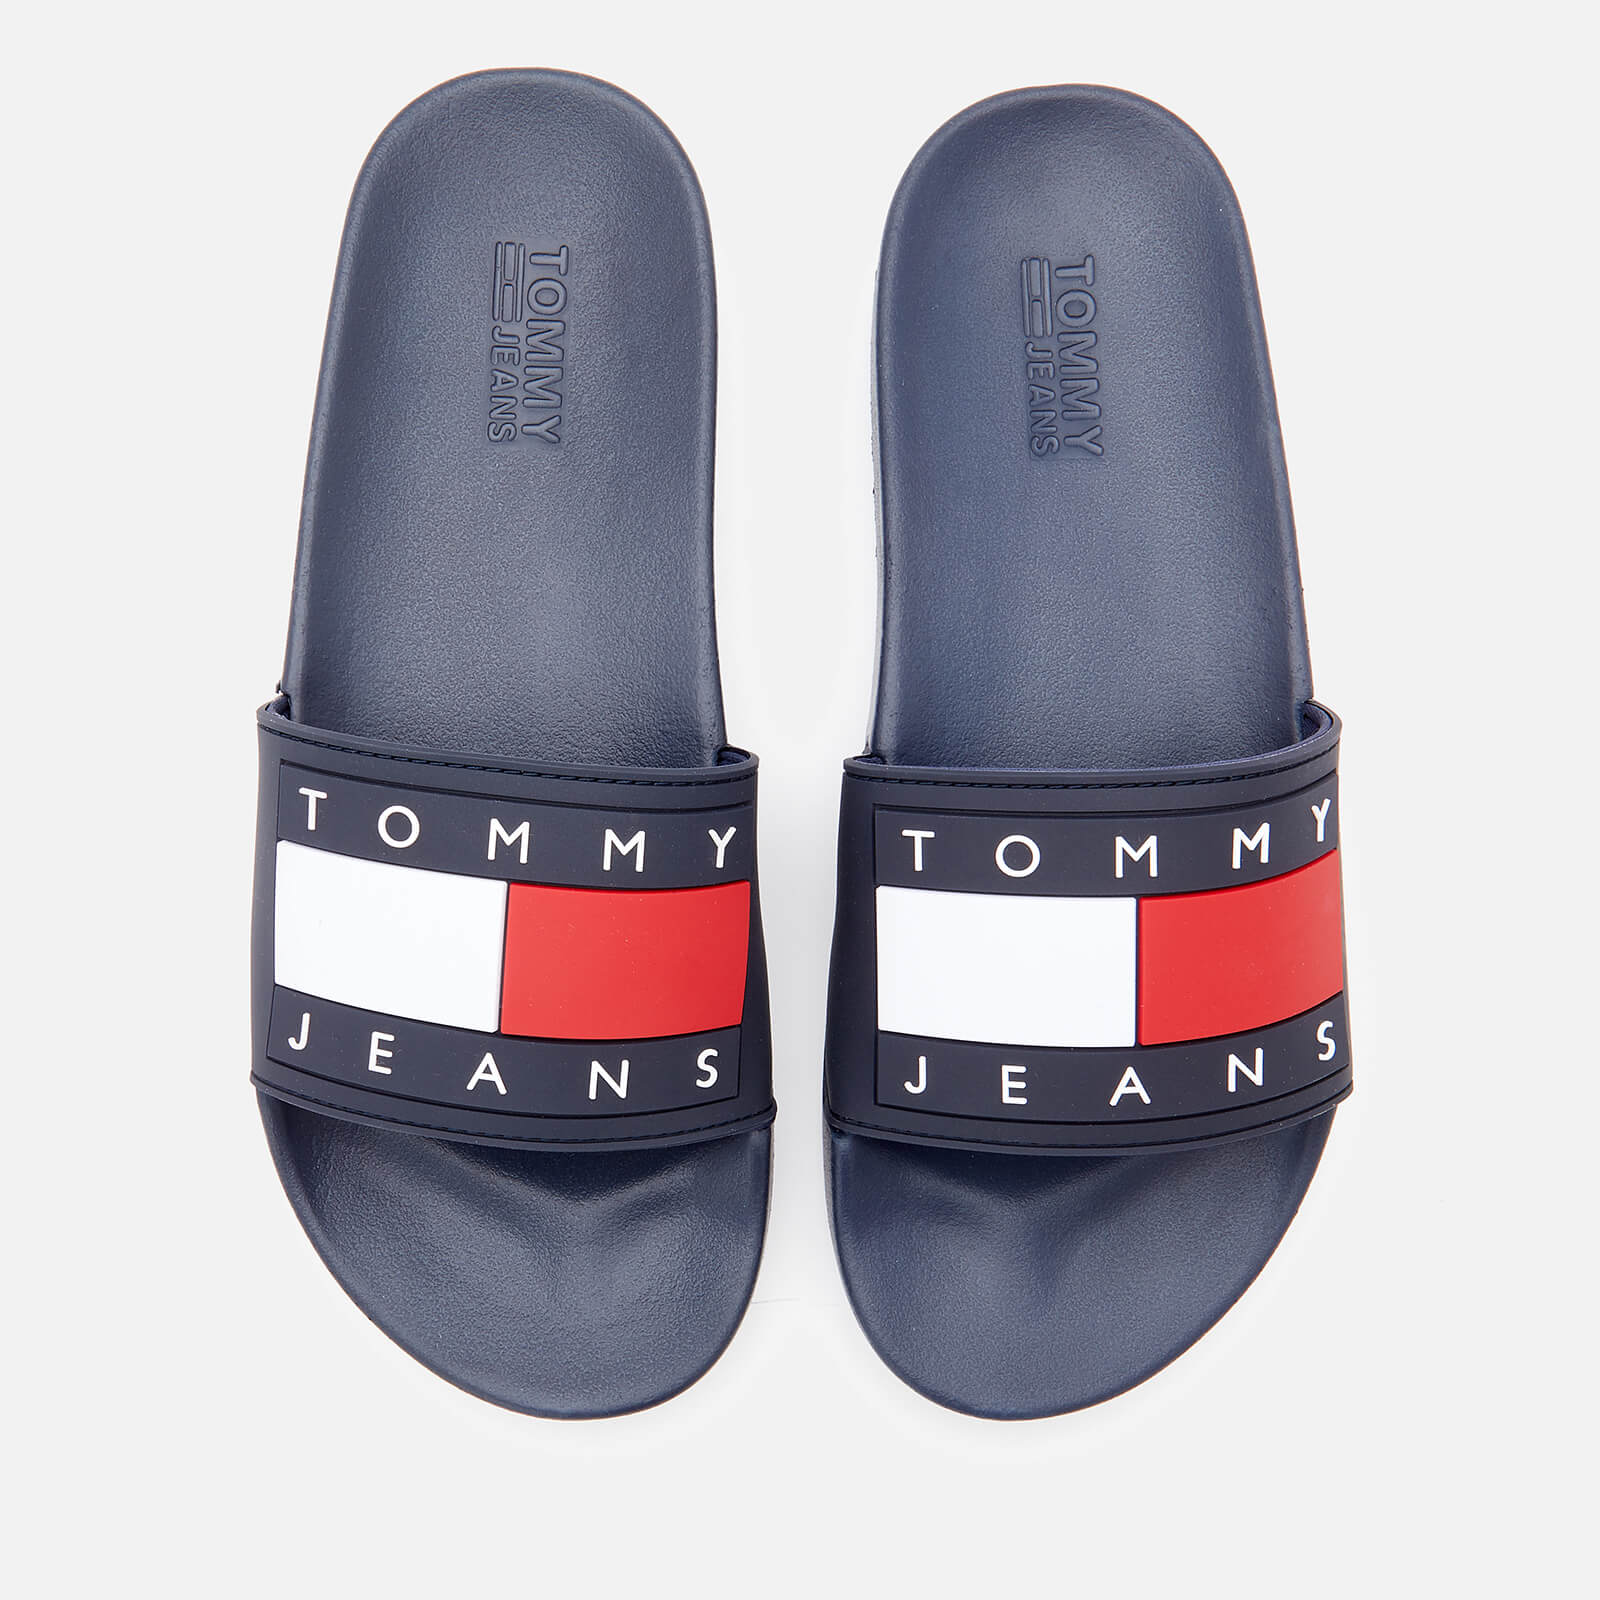 Tommy Jeans Women's Flag Pool Slide Sandals - Twilight Navy - UK 3.5